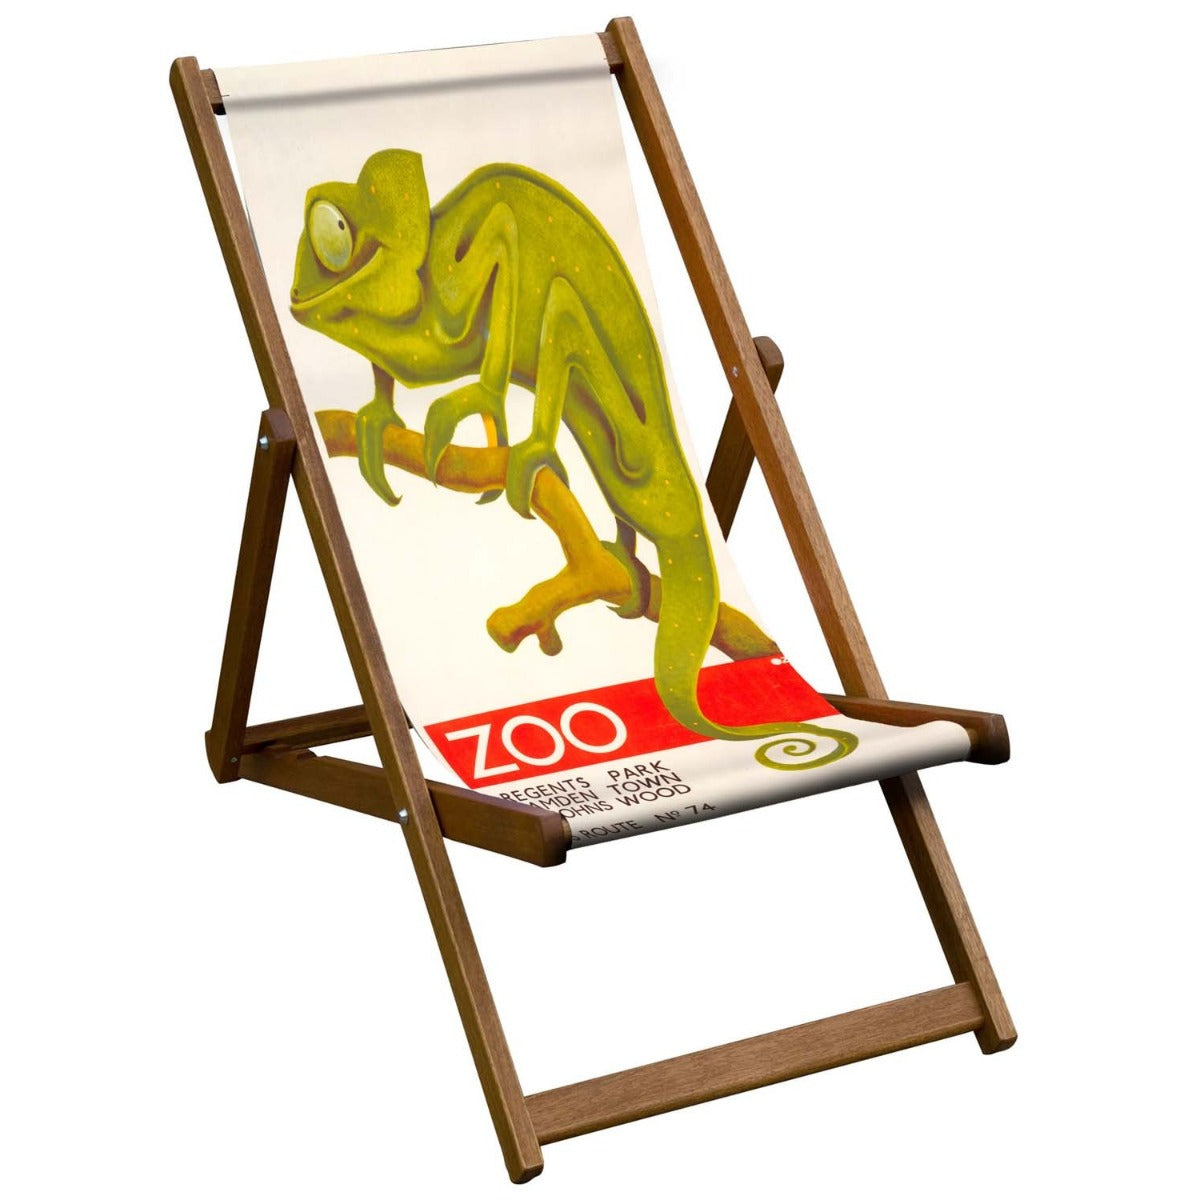 Vintage Inspired Wooden Deckchair- Zoo Chameleon- London Transport Poster